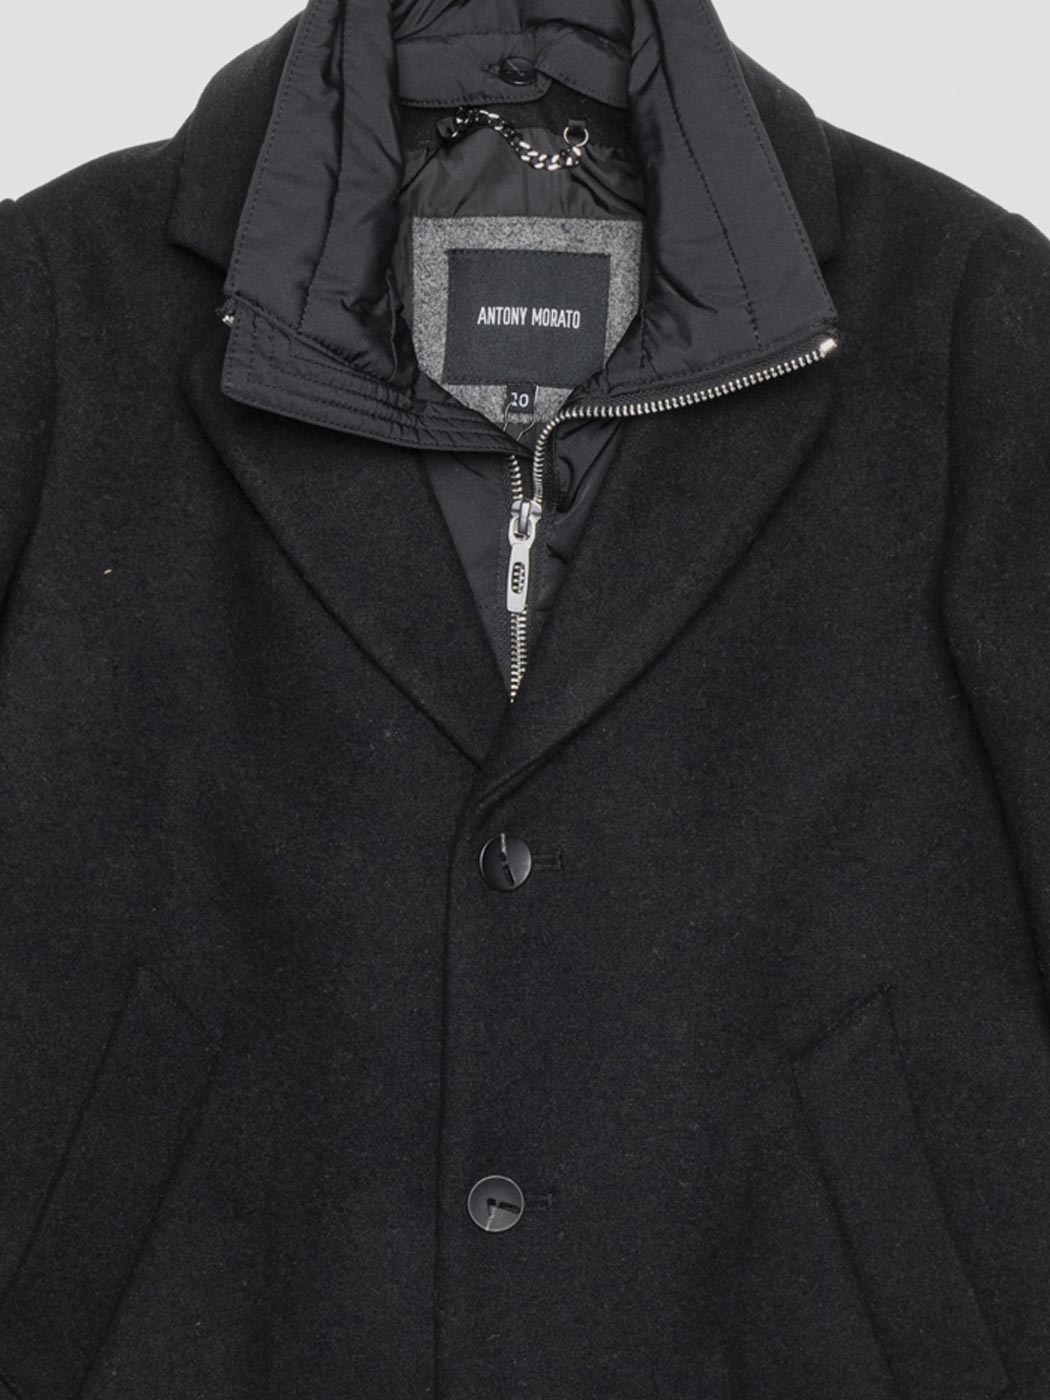 ANTONY MORATO Black Wool Coat- jacket for boy - MKCO00262